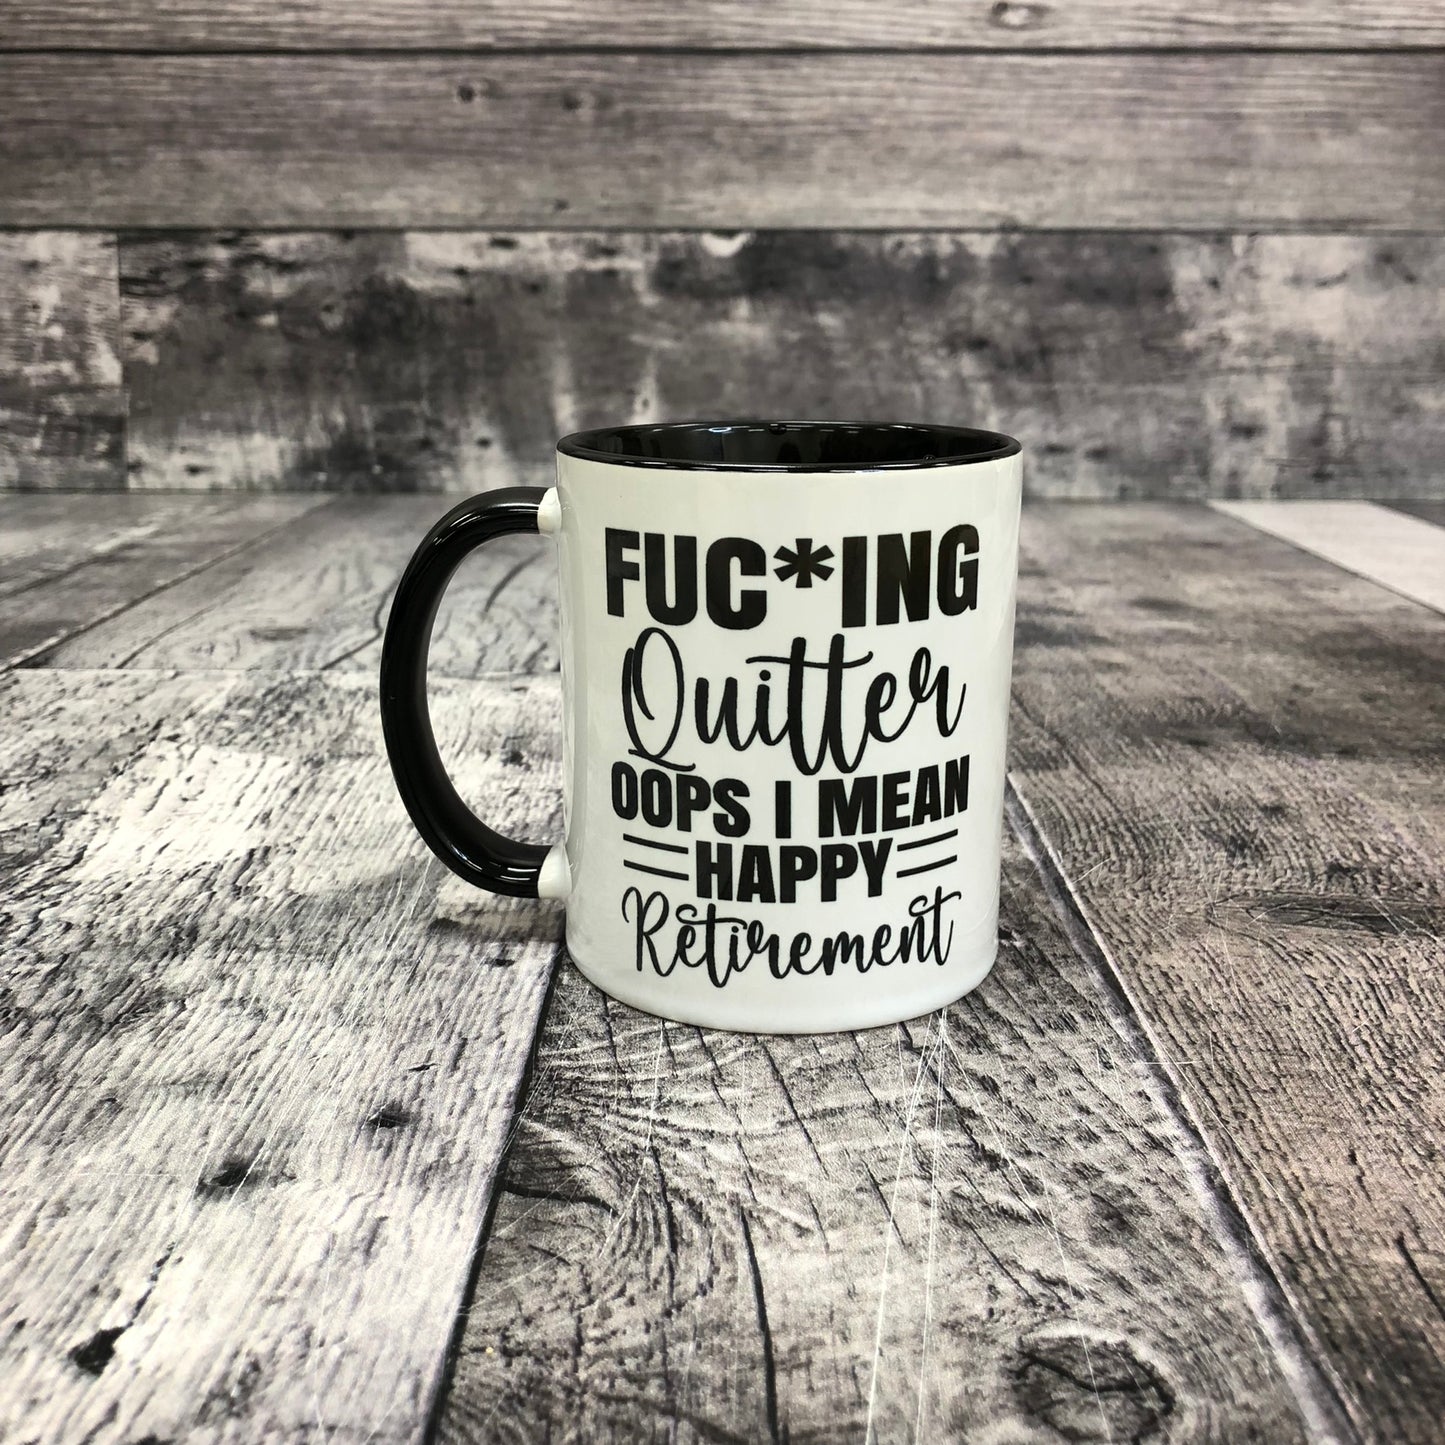 Fuc*ing Quitter Oops I Mean Happy Retirement script - 11 oz ceramic mug